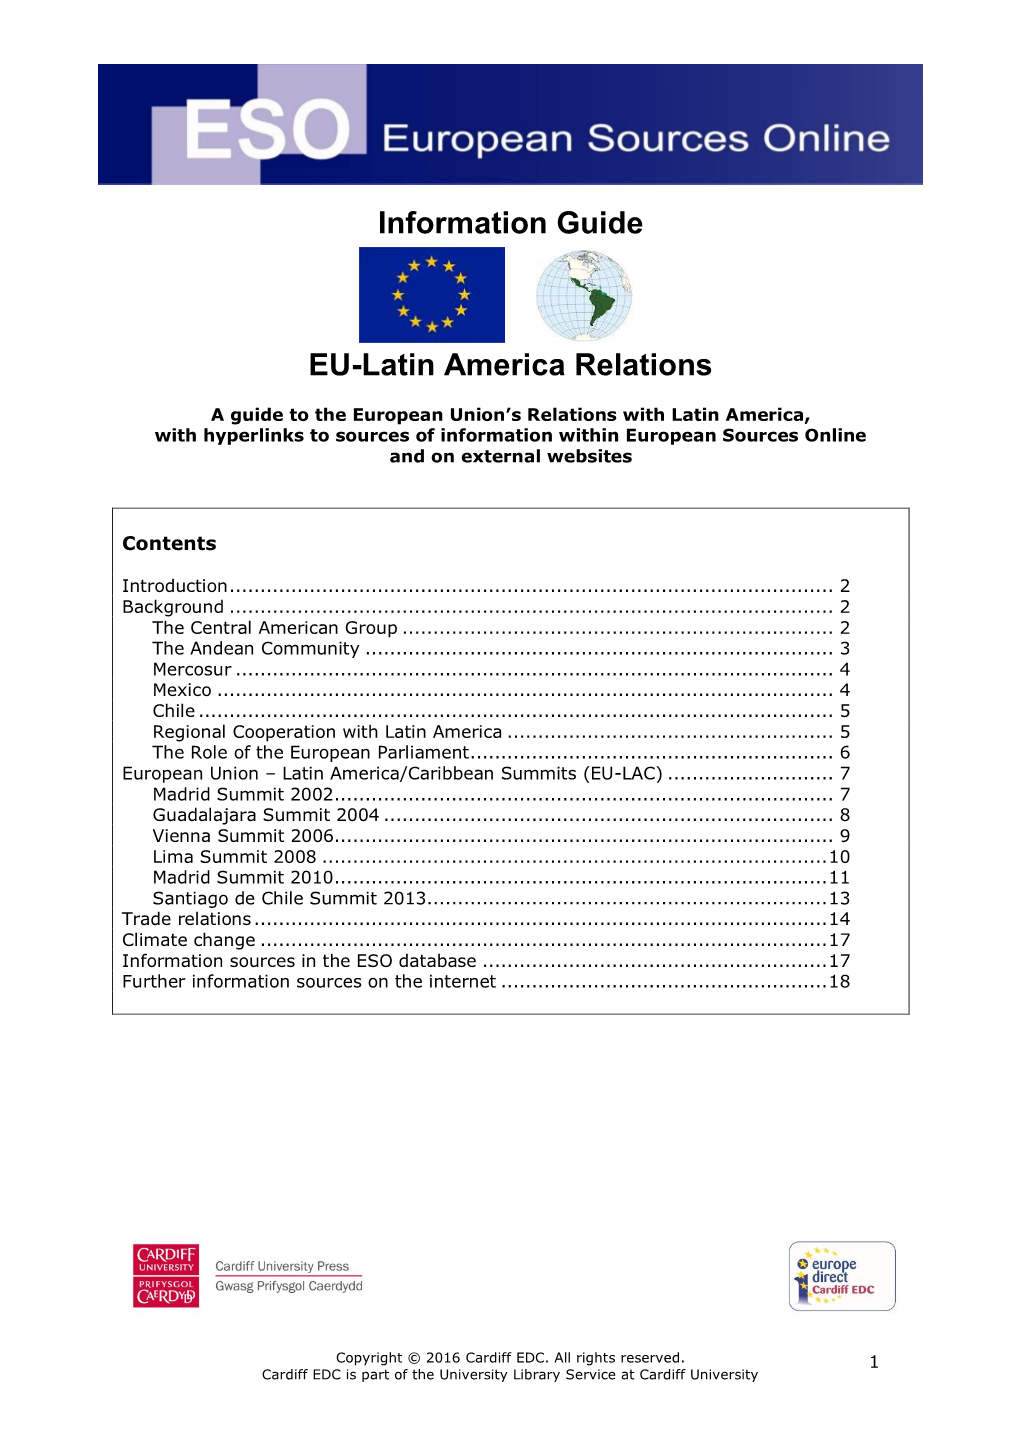 Information Guide EU-Latin America Relations